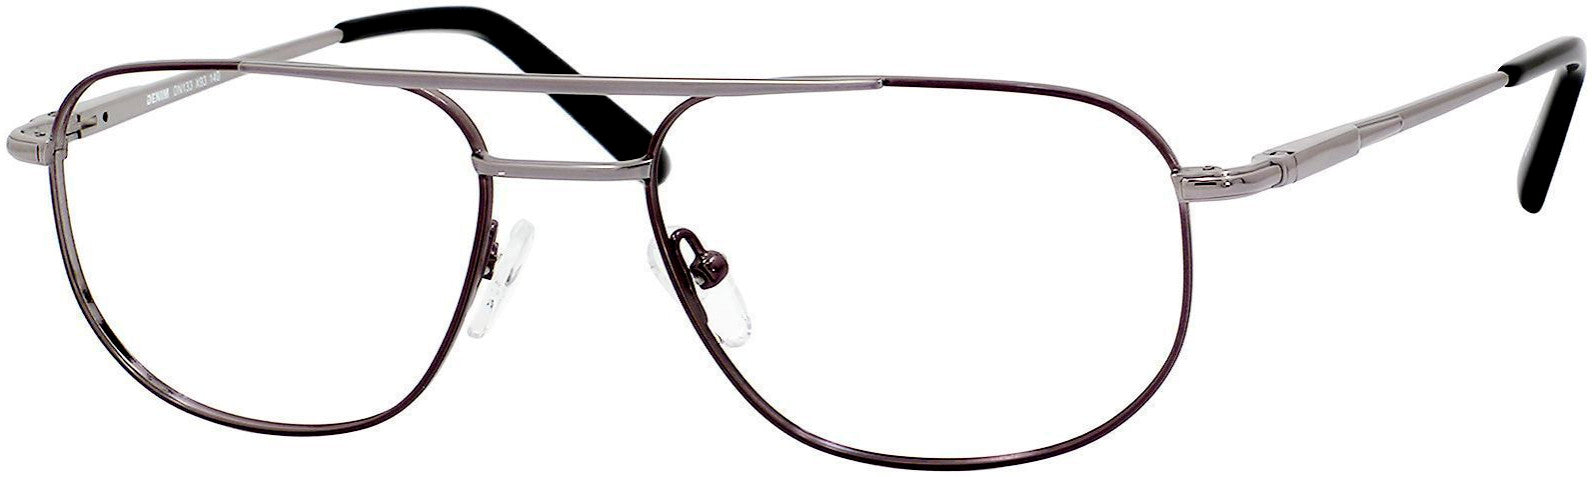  Denim 133 Oval Modified Eyeglasses 0X93-0X93  Gunmetal (00 Demo Lens)